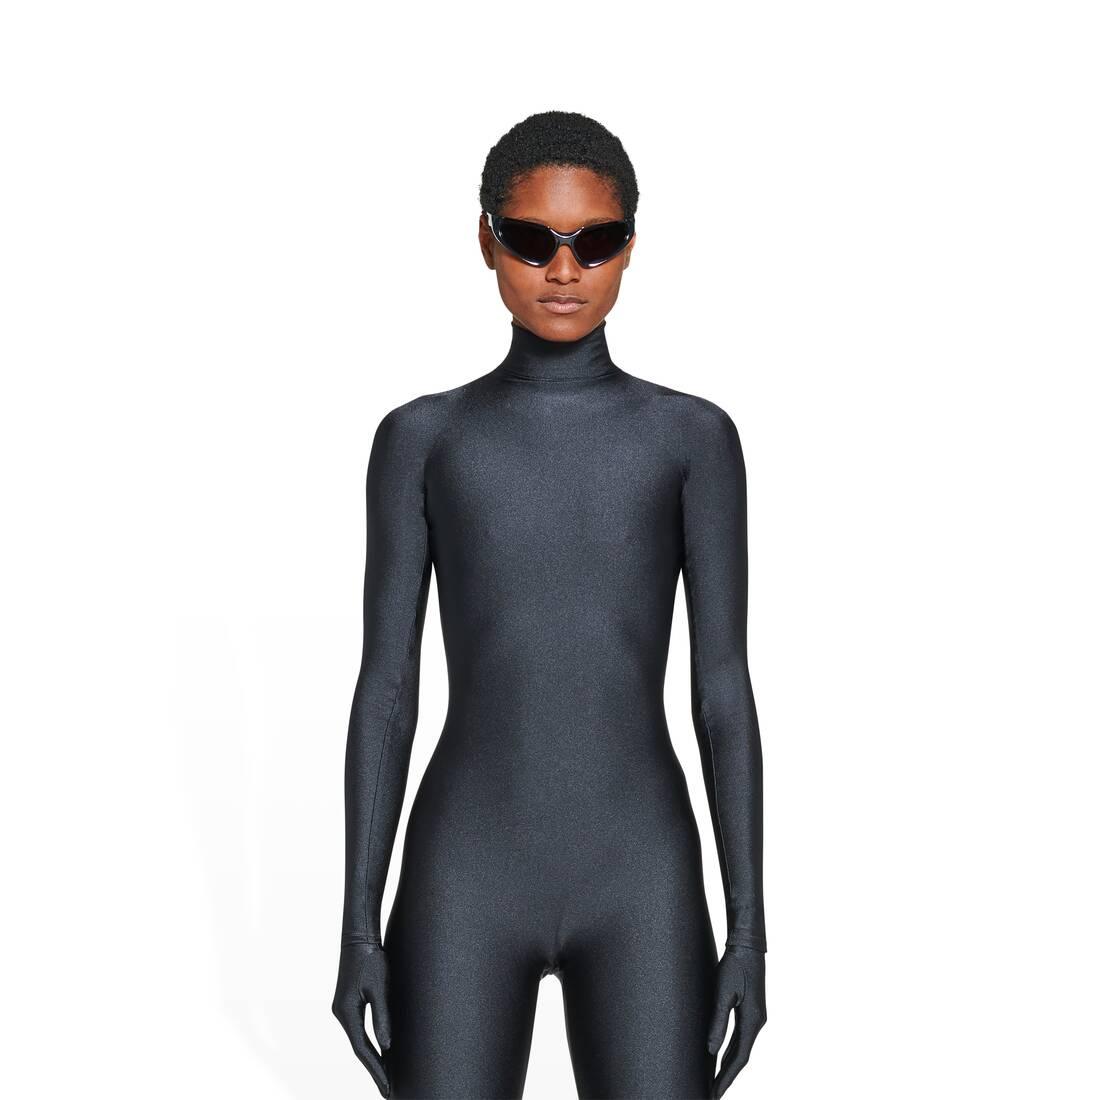 Balenciaga Falkon Bodysuit in Black | Lyst